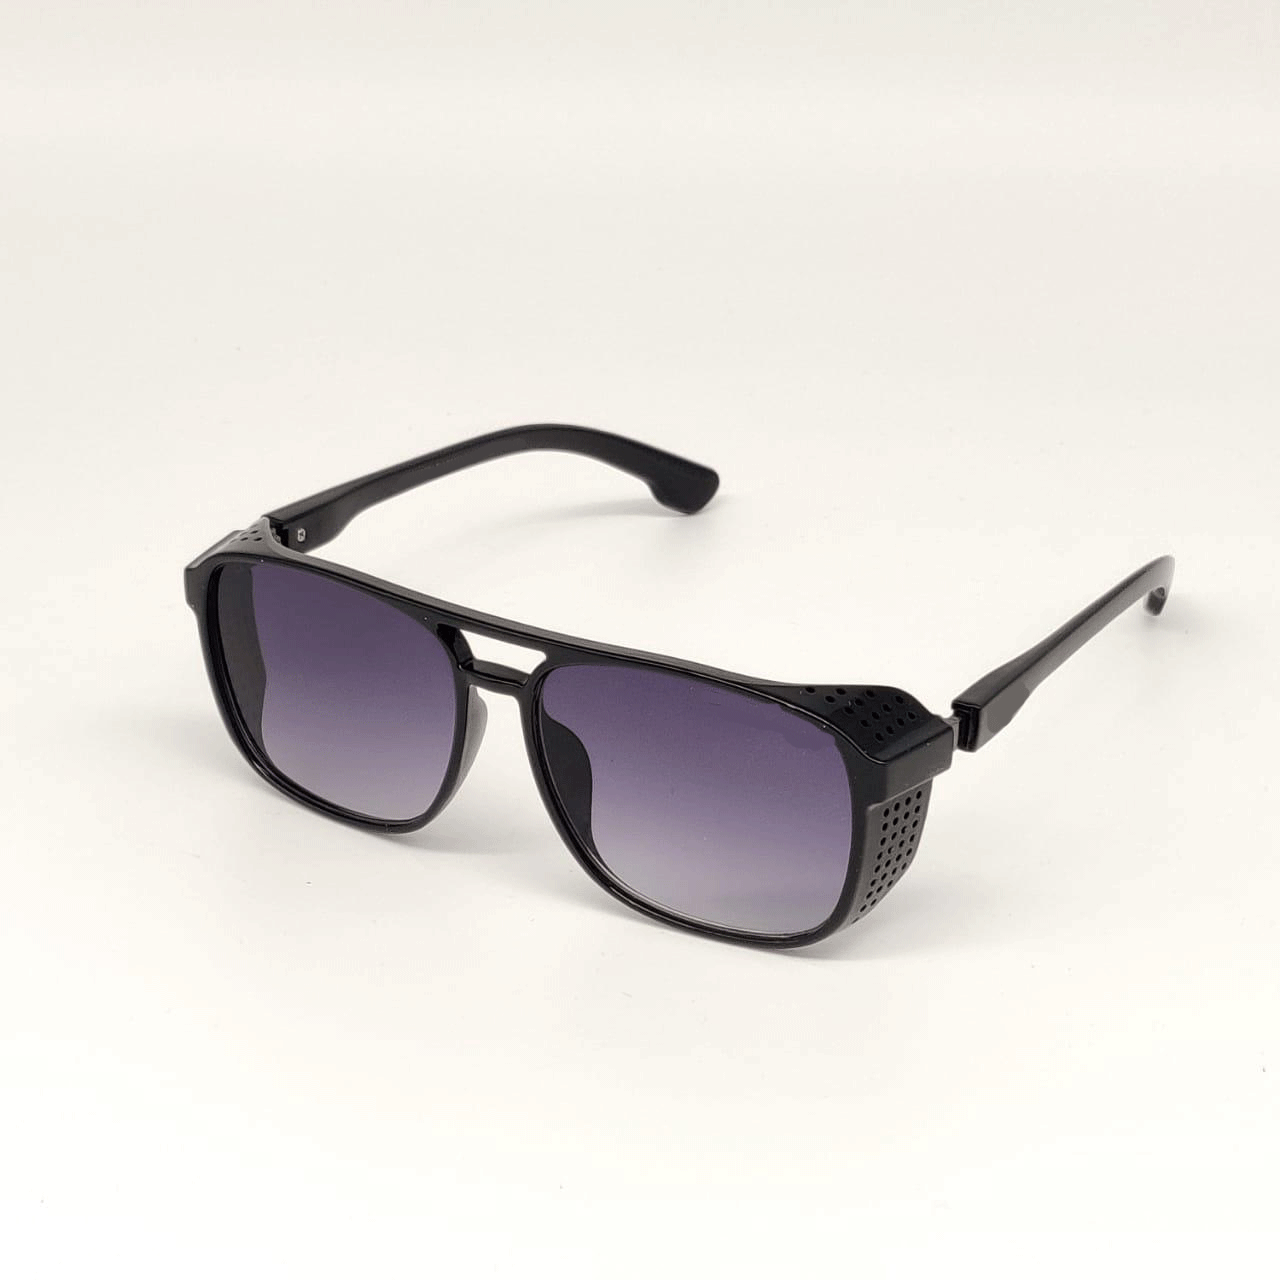 Square Side Cap Sunglasses For Men And Women-Unique and Classy